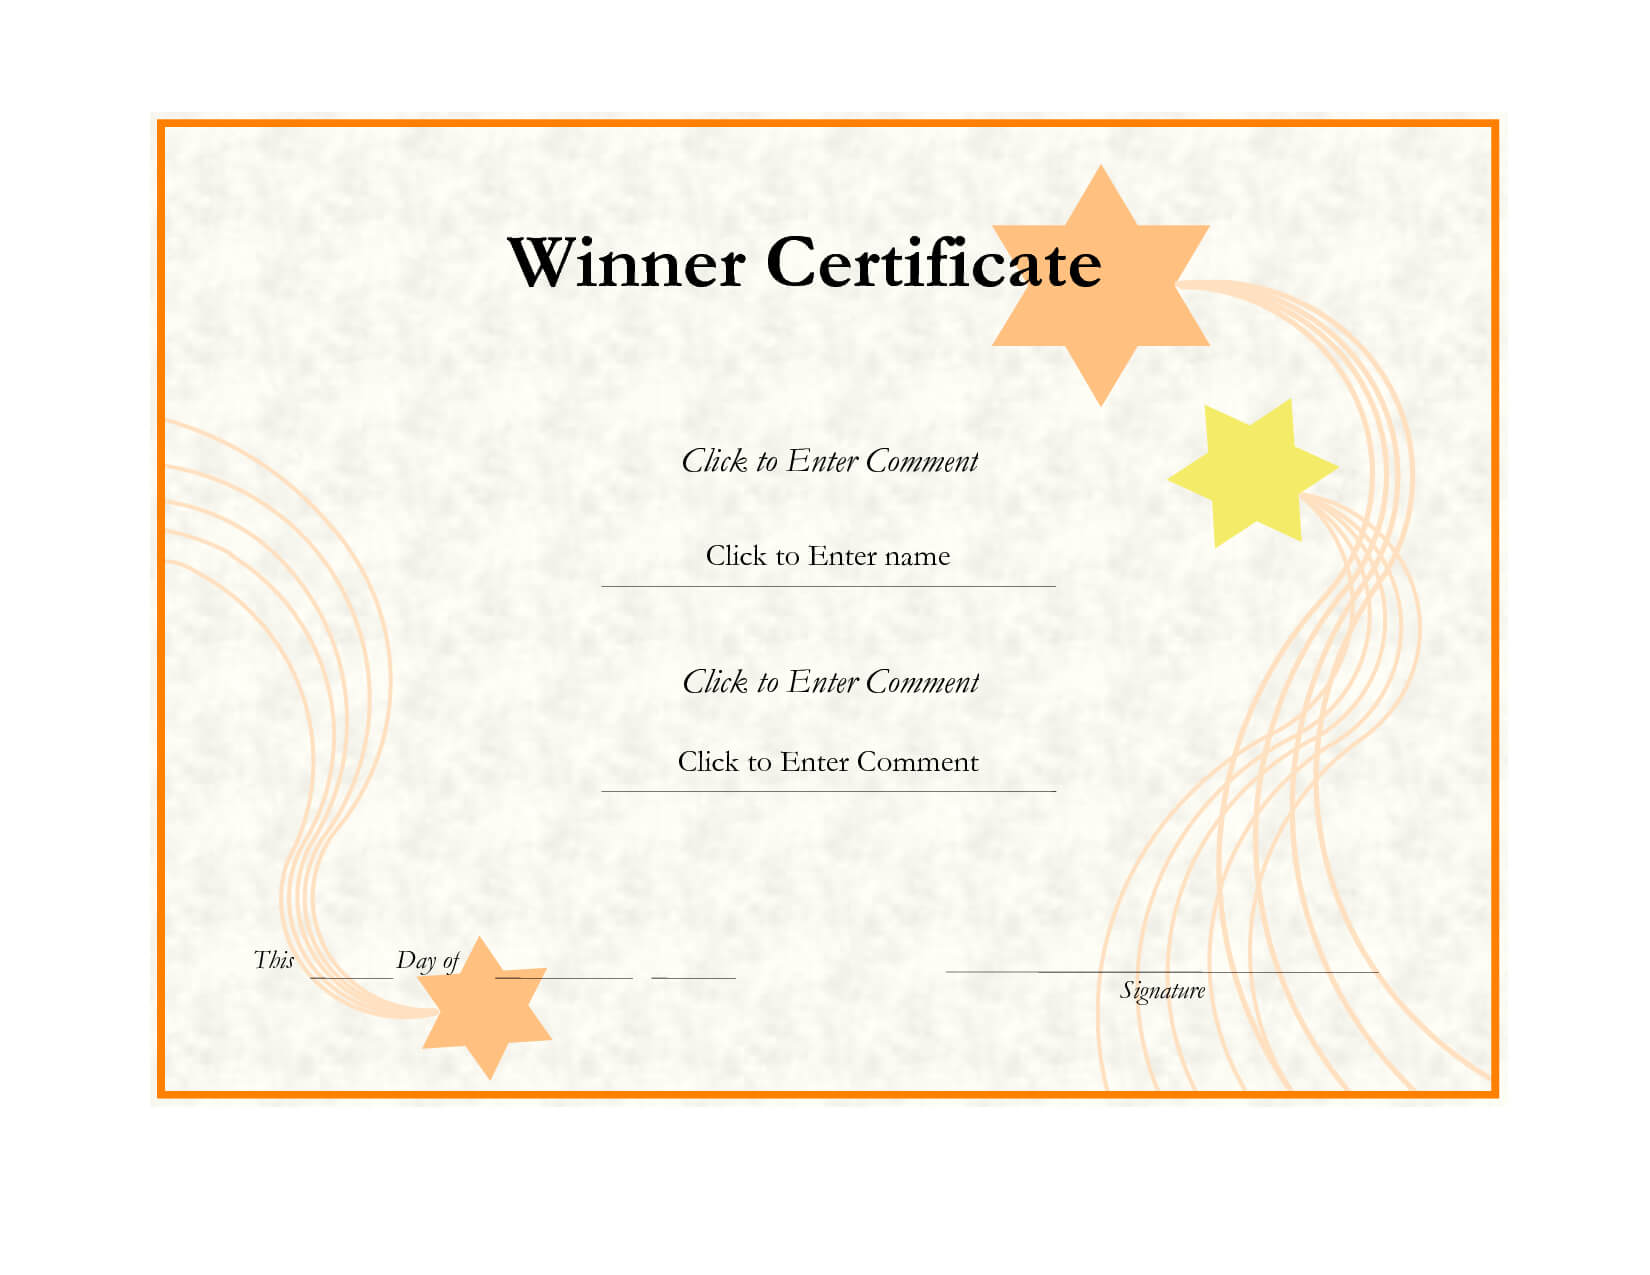 Effective Winner Certificate Template Designlizzy2008 Intended For Winner Certificate Template